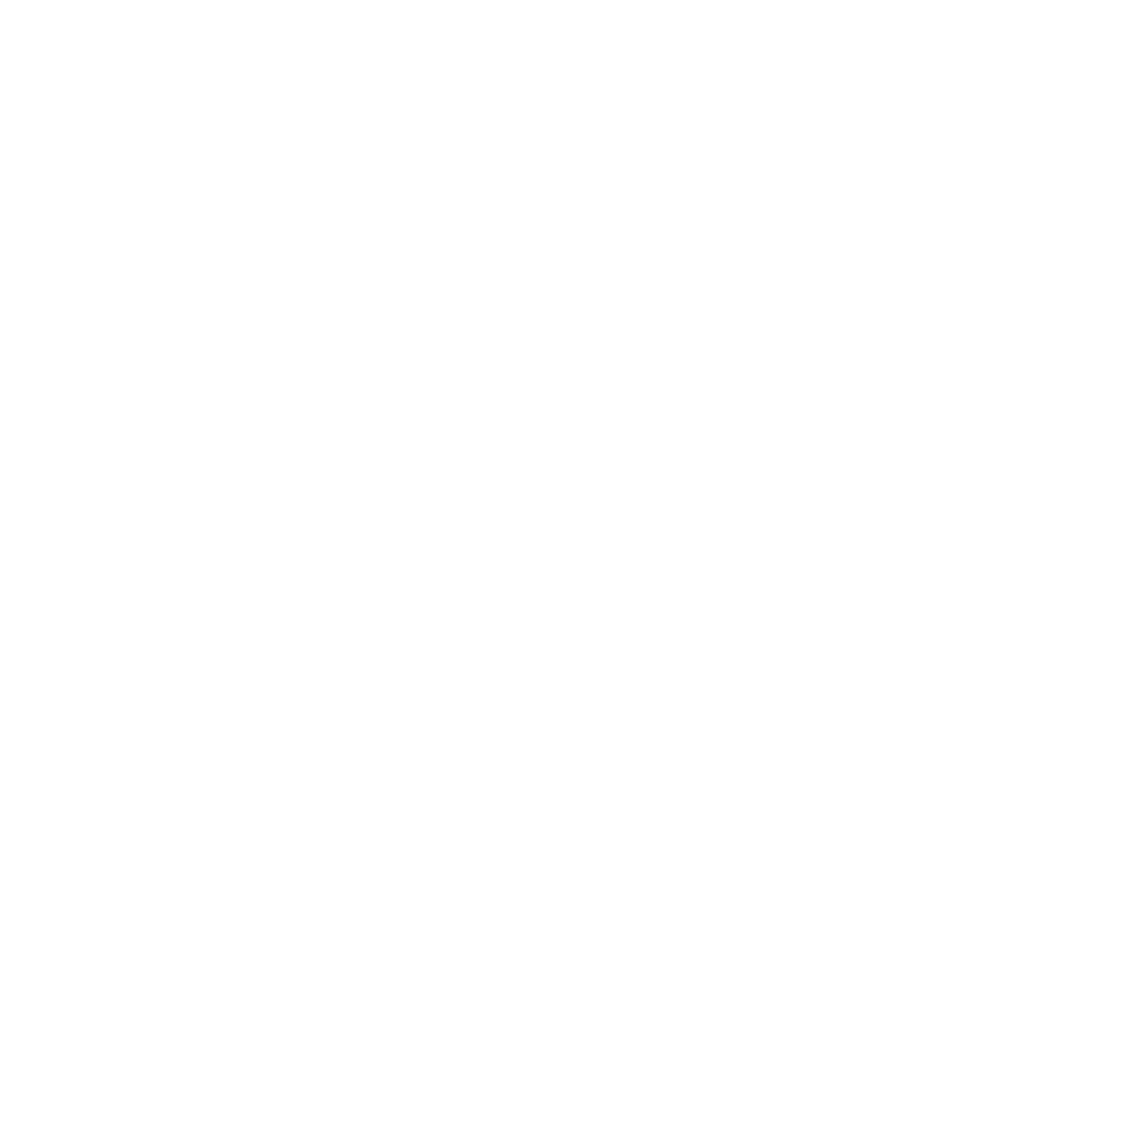 Japan Import Business Organization